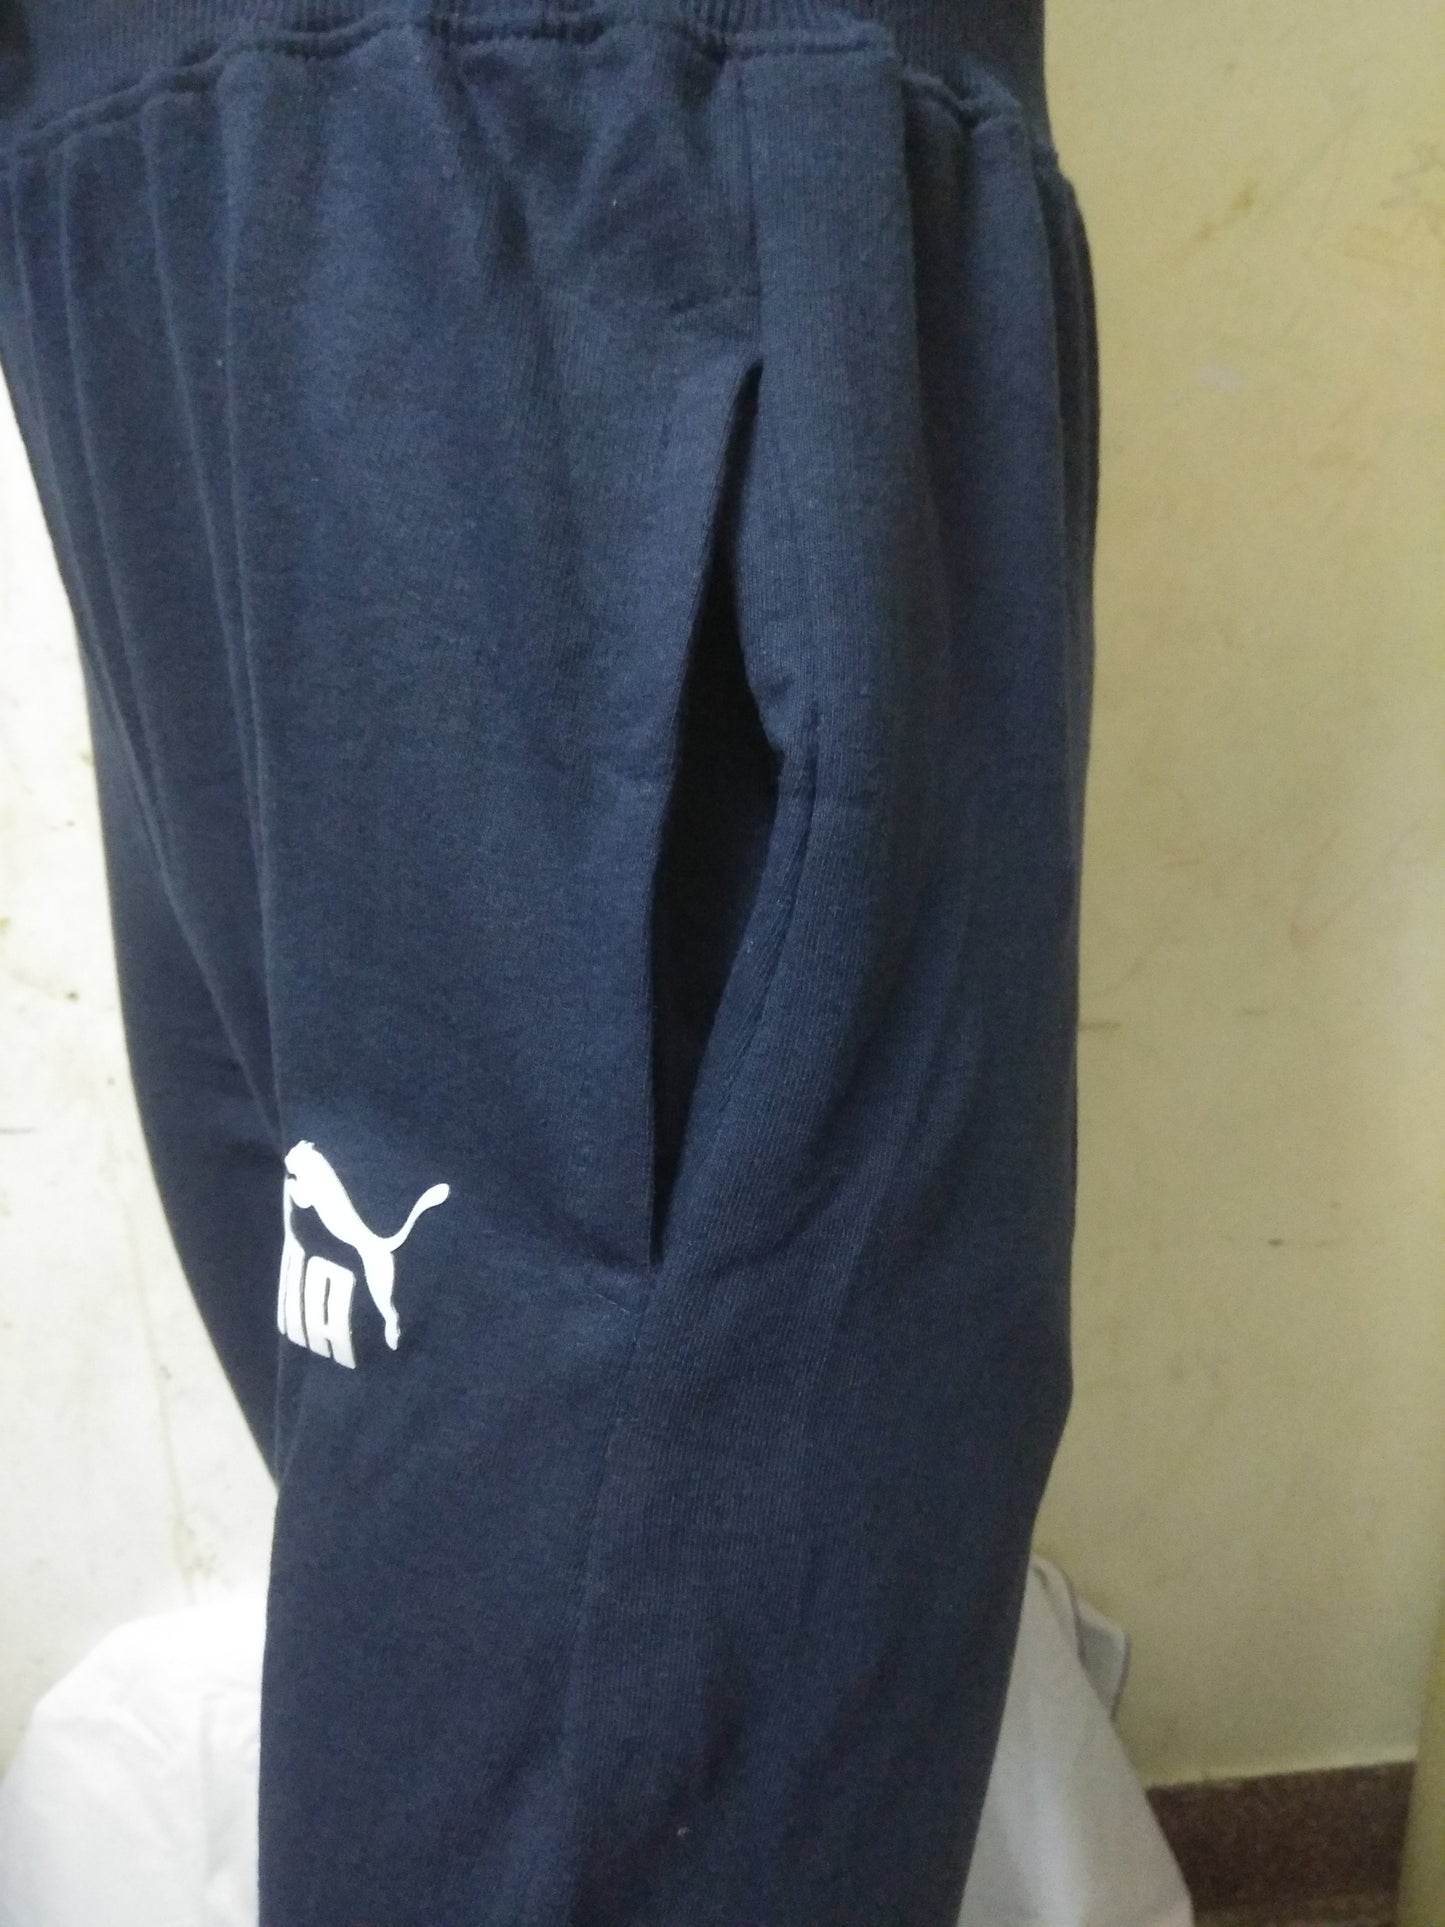 Branded Night Pant/Track Suit for men Dark Blue Colour